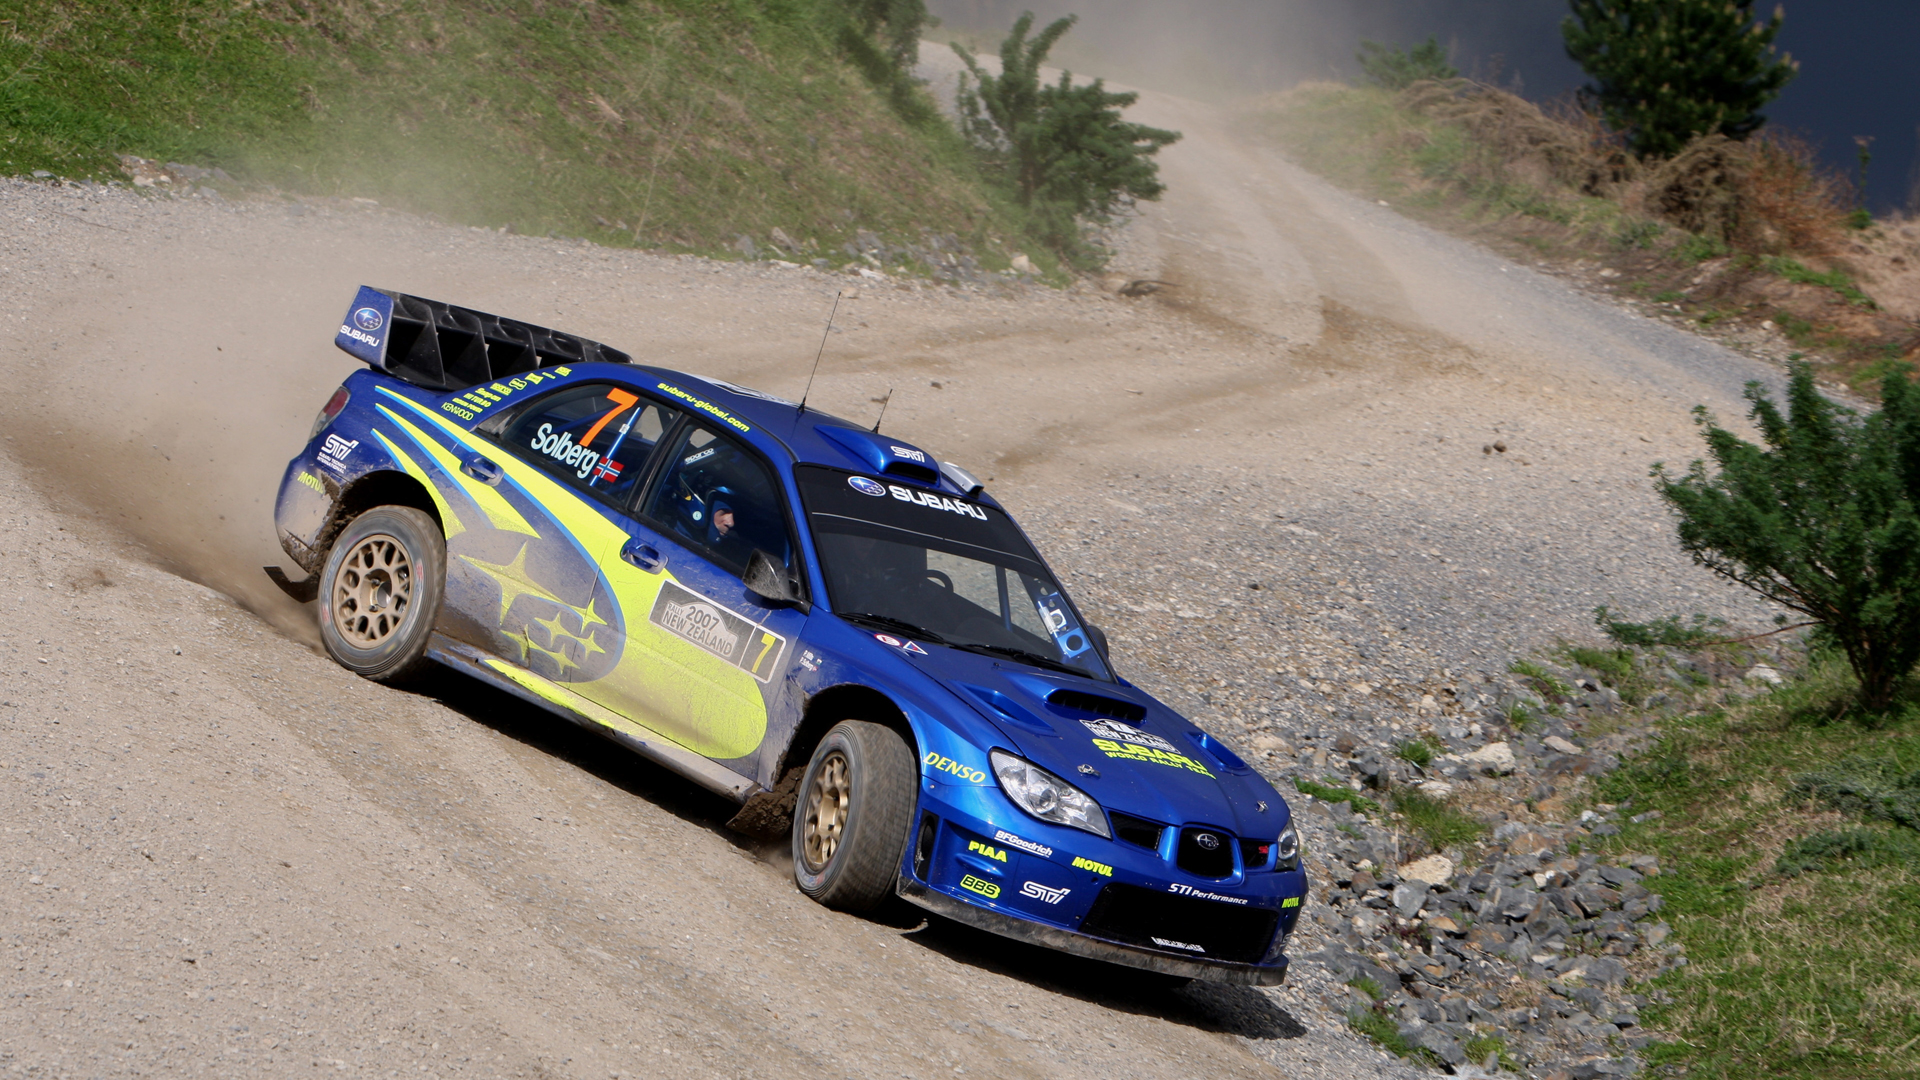 HQ Subaru Impreza WRC Wallpapers | File 1633.57Kb